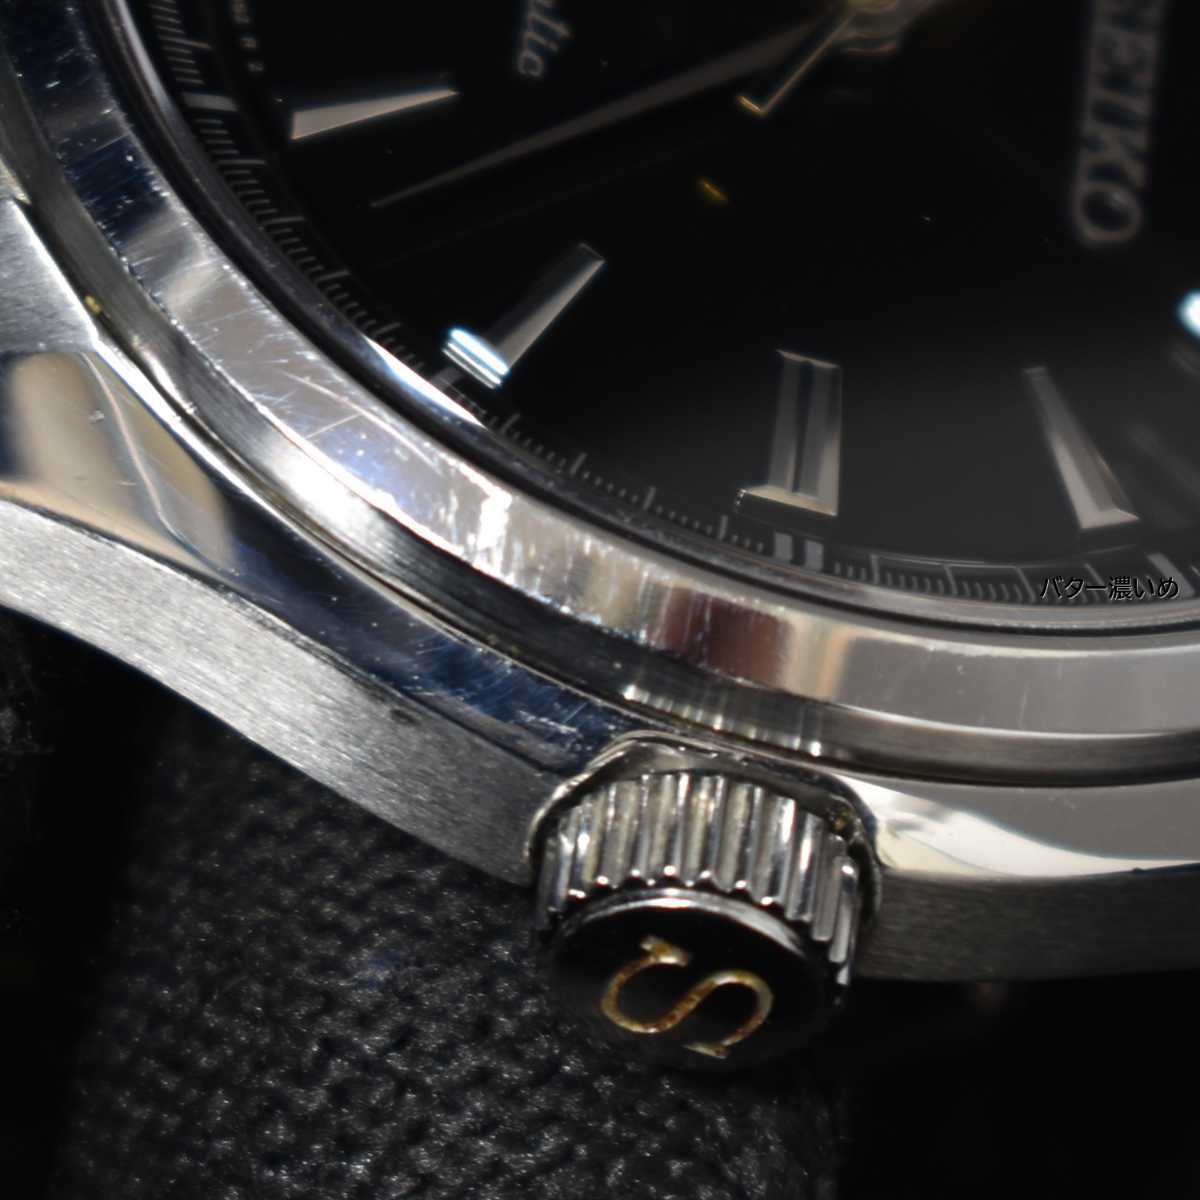 SEIKO セイコー メンズ腕時計 プレザージュ/プレサージュ 革ベルトなし 付属品なし 自動巻き メカニカル オープンハート SARY053 中古品